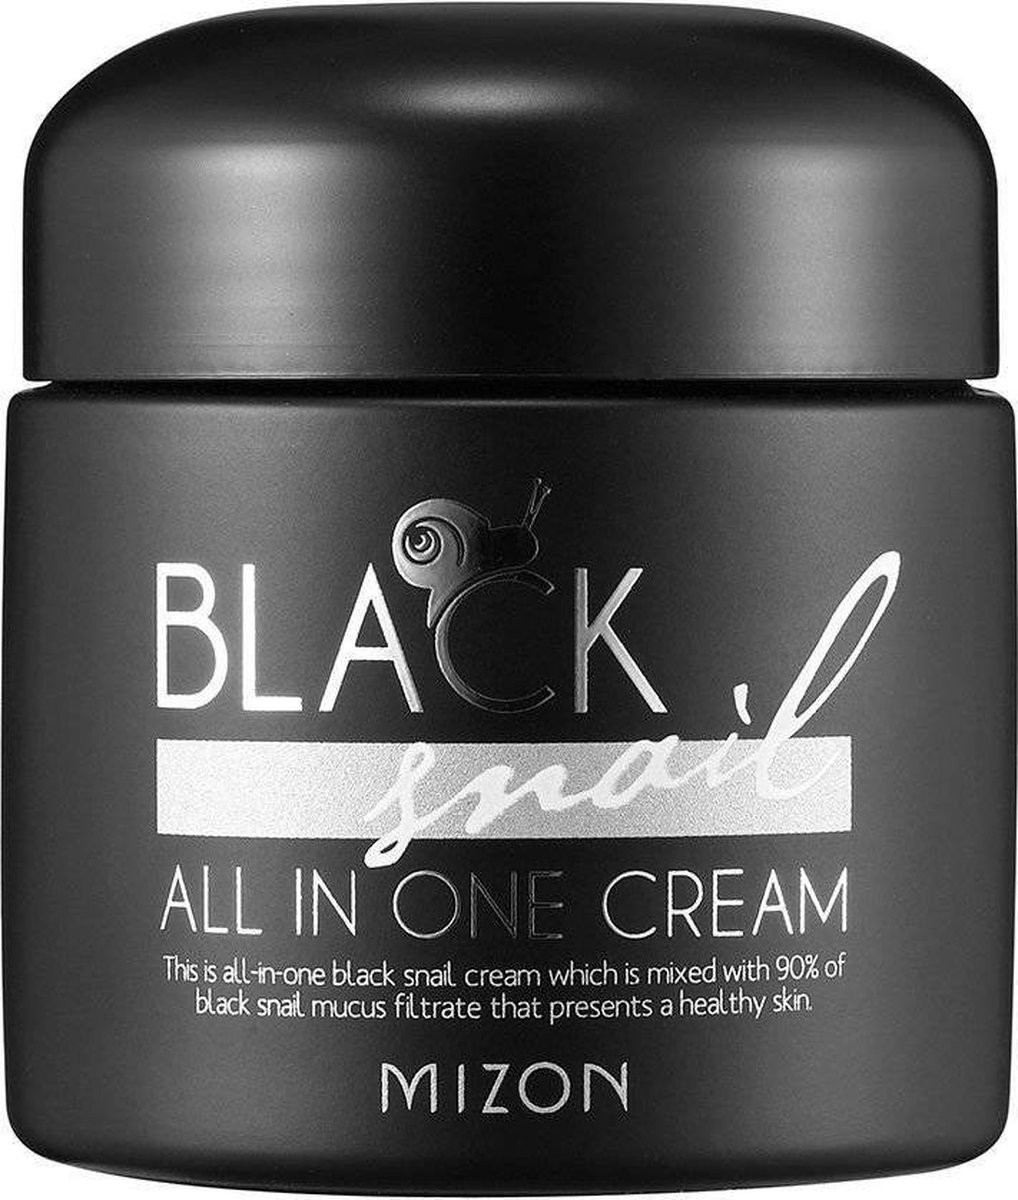 Mizon - Black Snail All In One Cream 90%